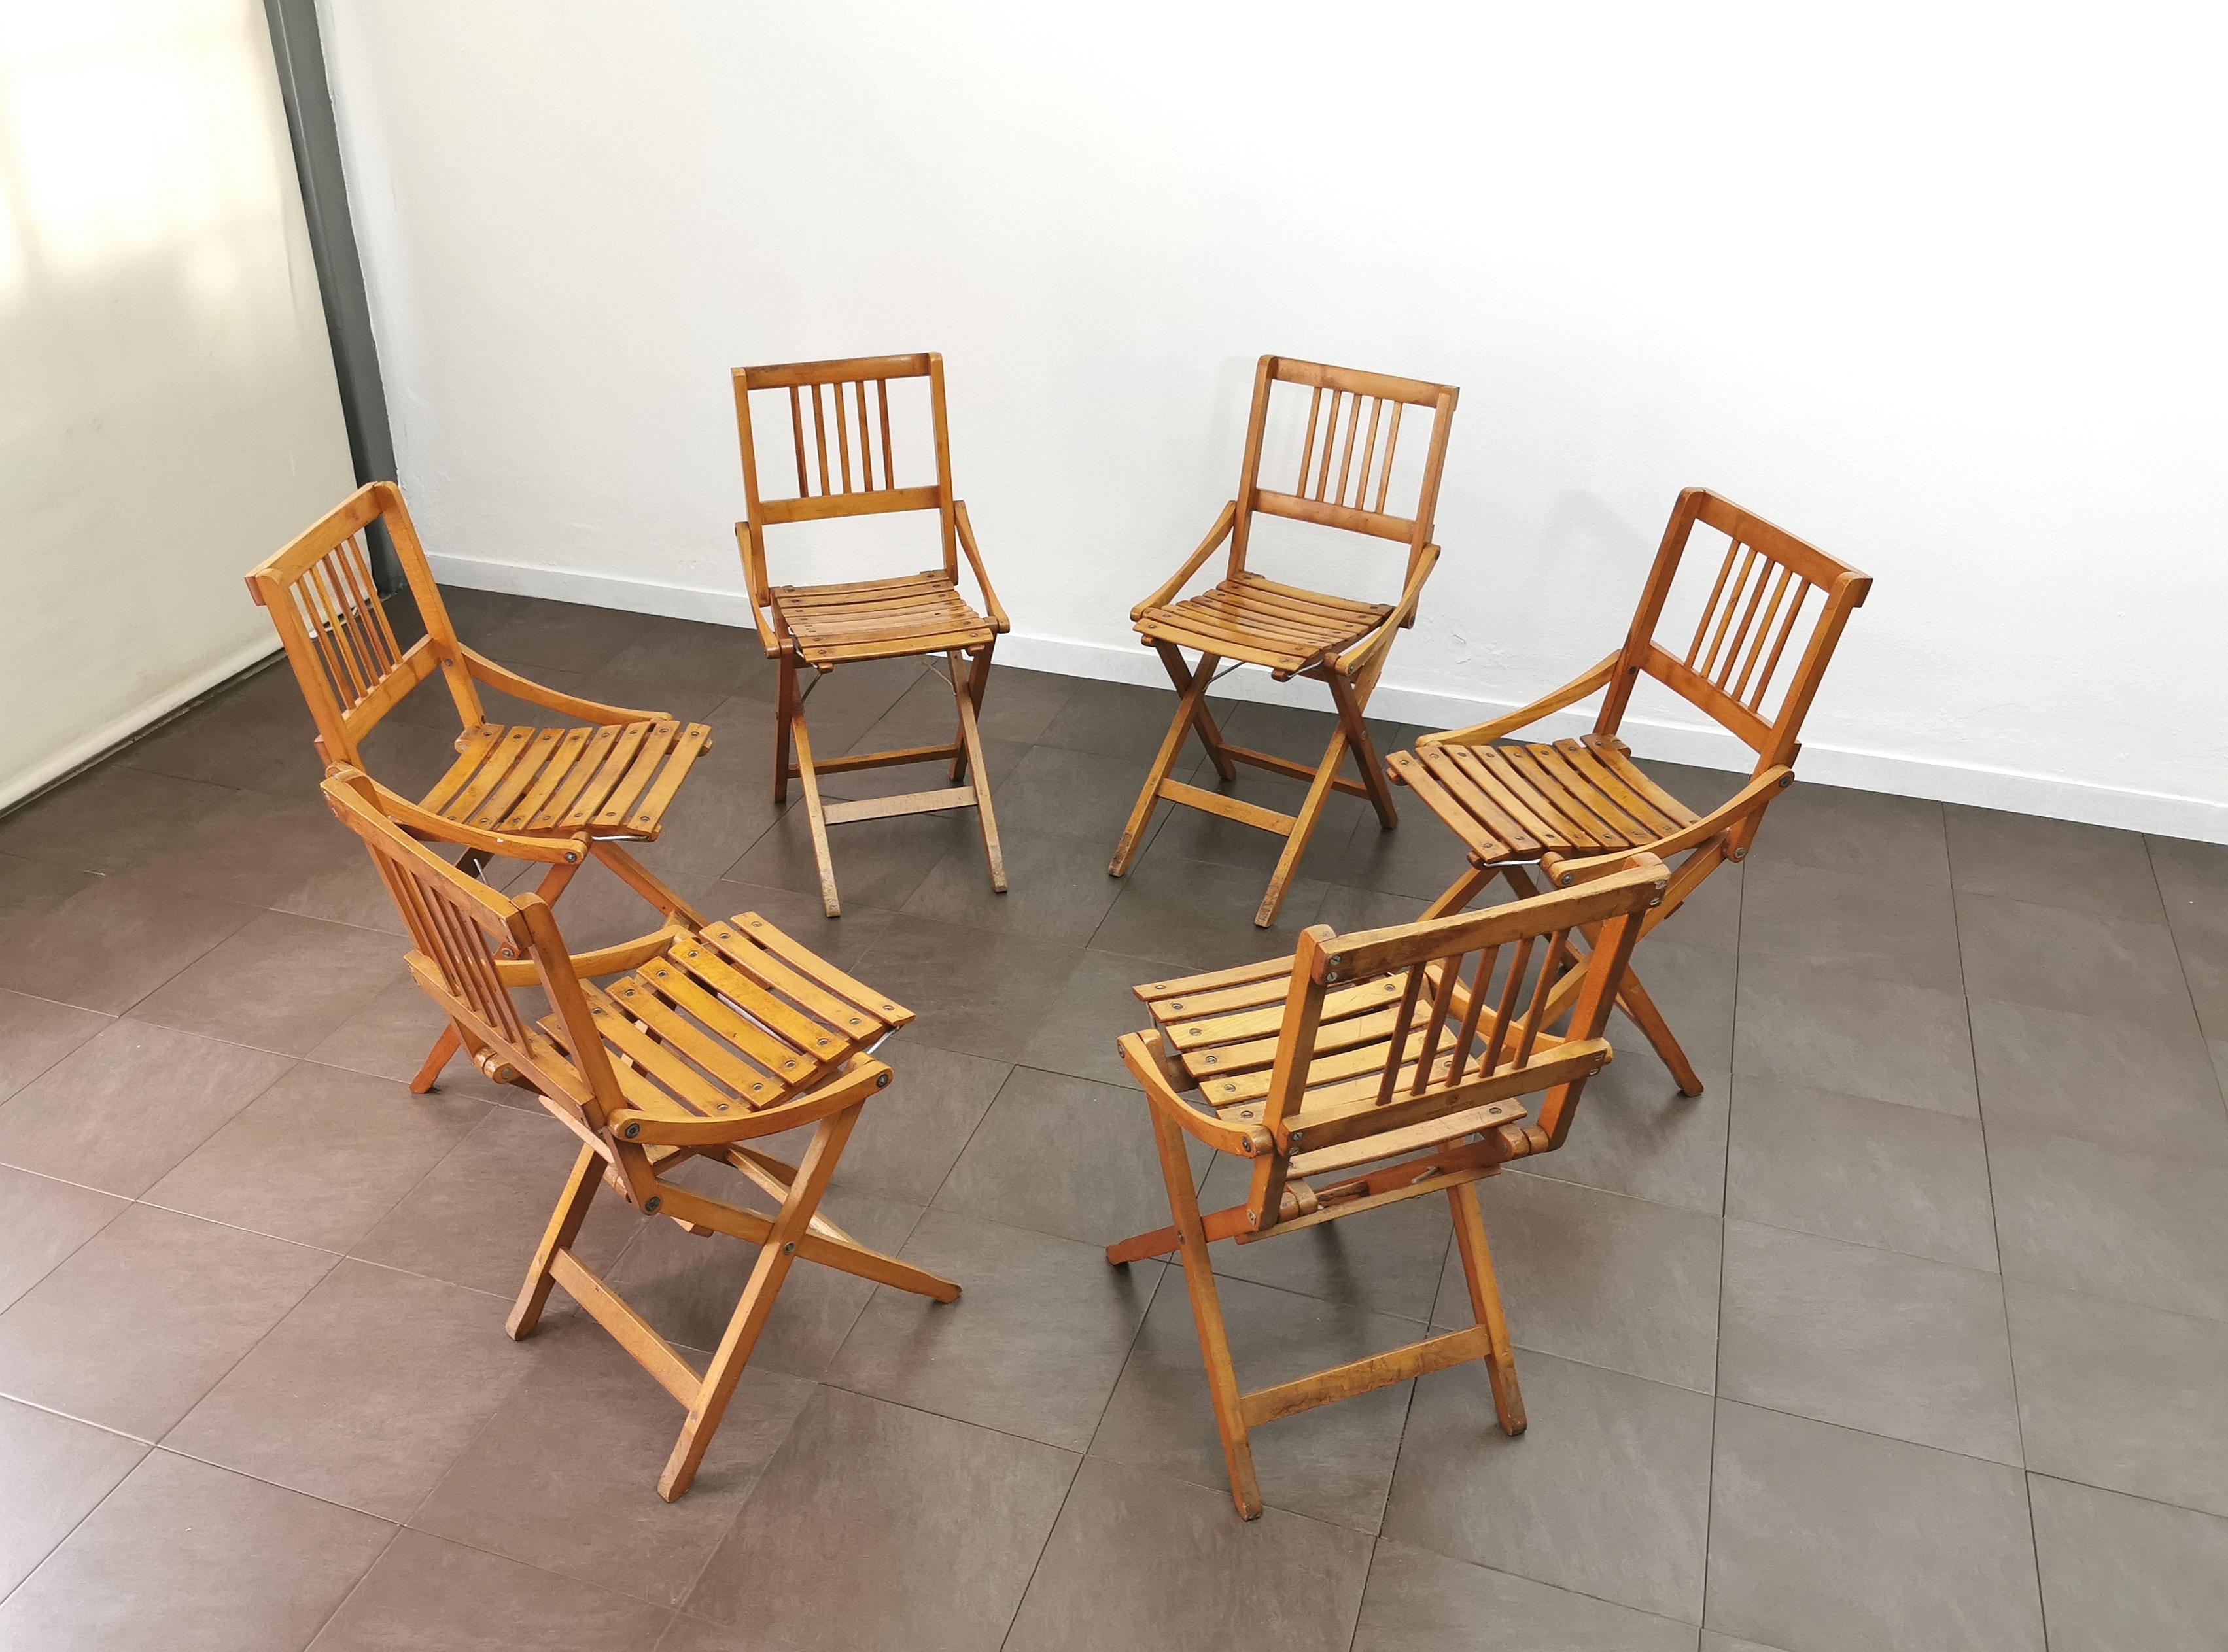 20th Century Folding Chairs Wood Fratelli Reguitti Midcentury Italian Design 1950s Set of 15